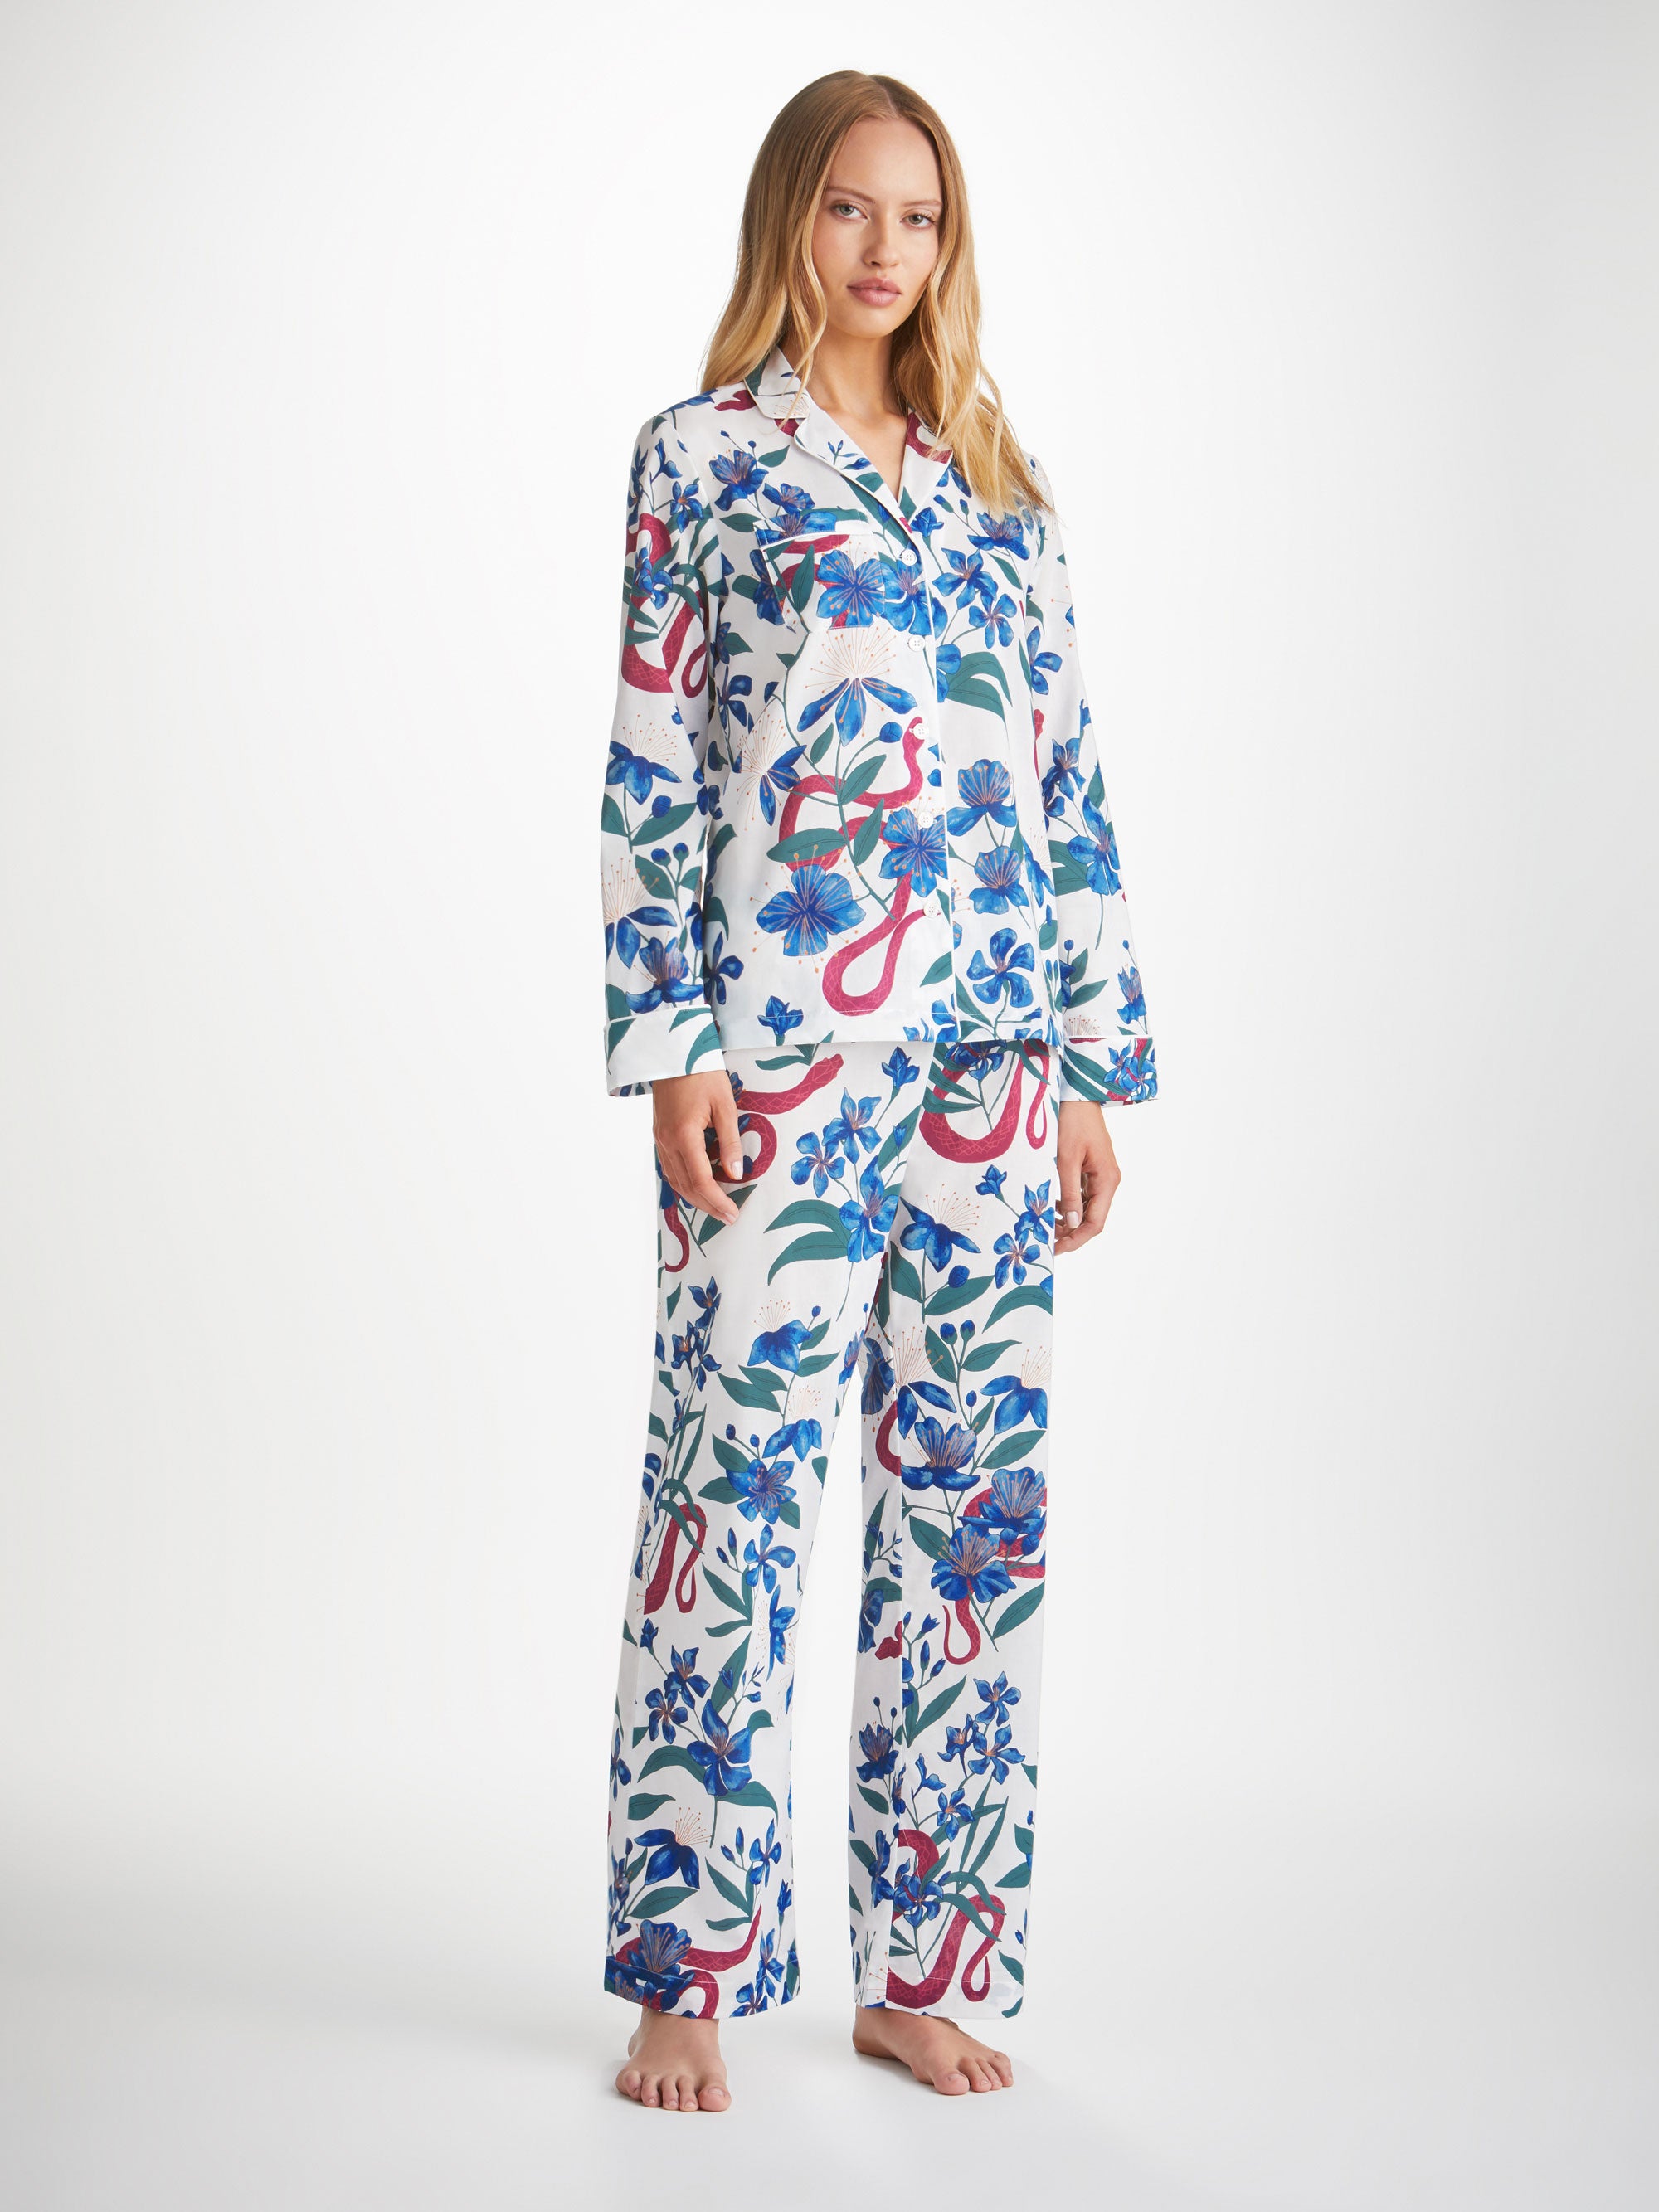 Women's Pyjamas Ledbury 68 Cotton Batiste Multi